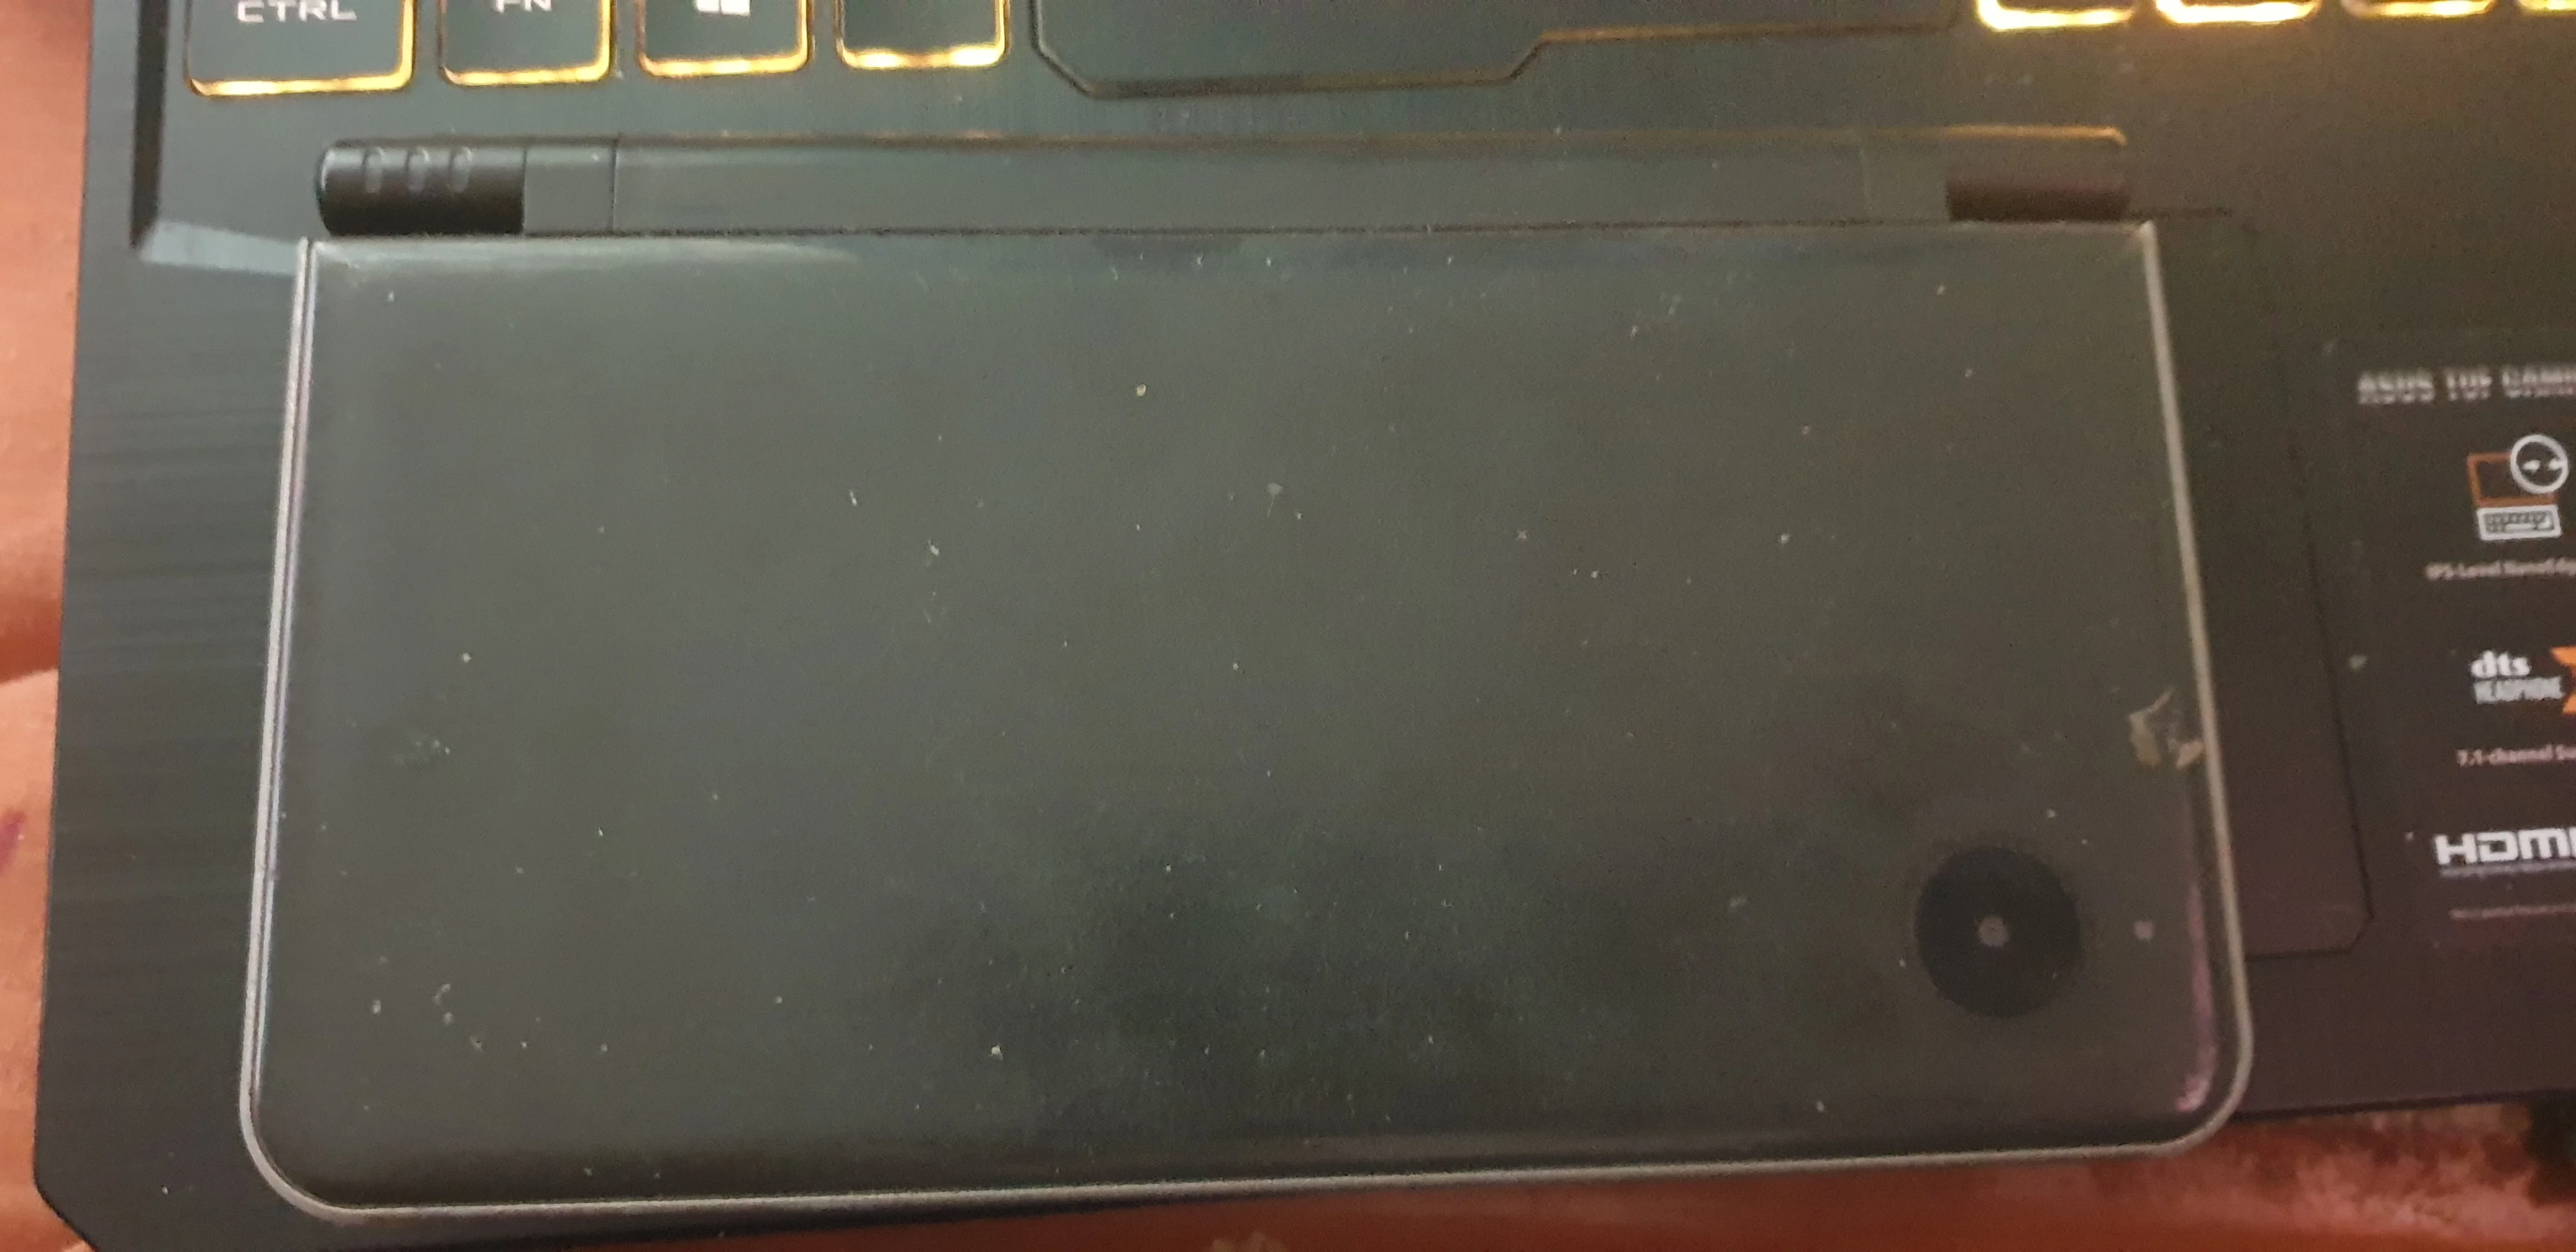  Nintendo DSi XL Bronze Console [AUS]